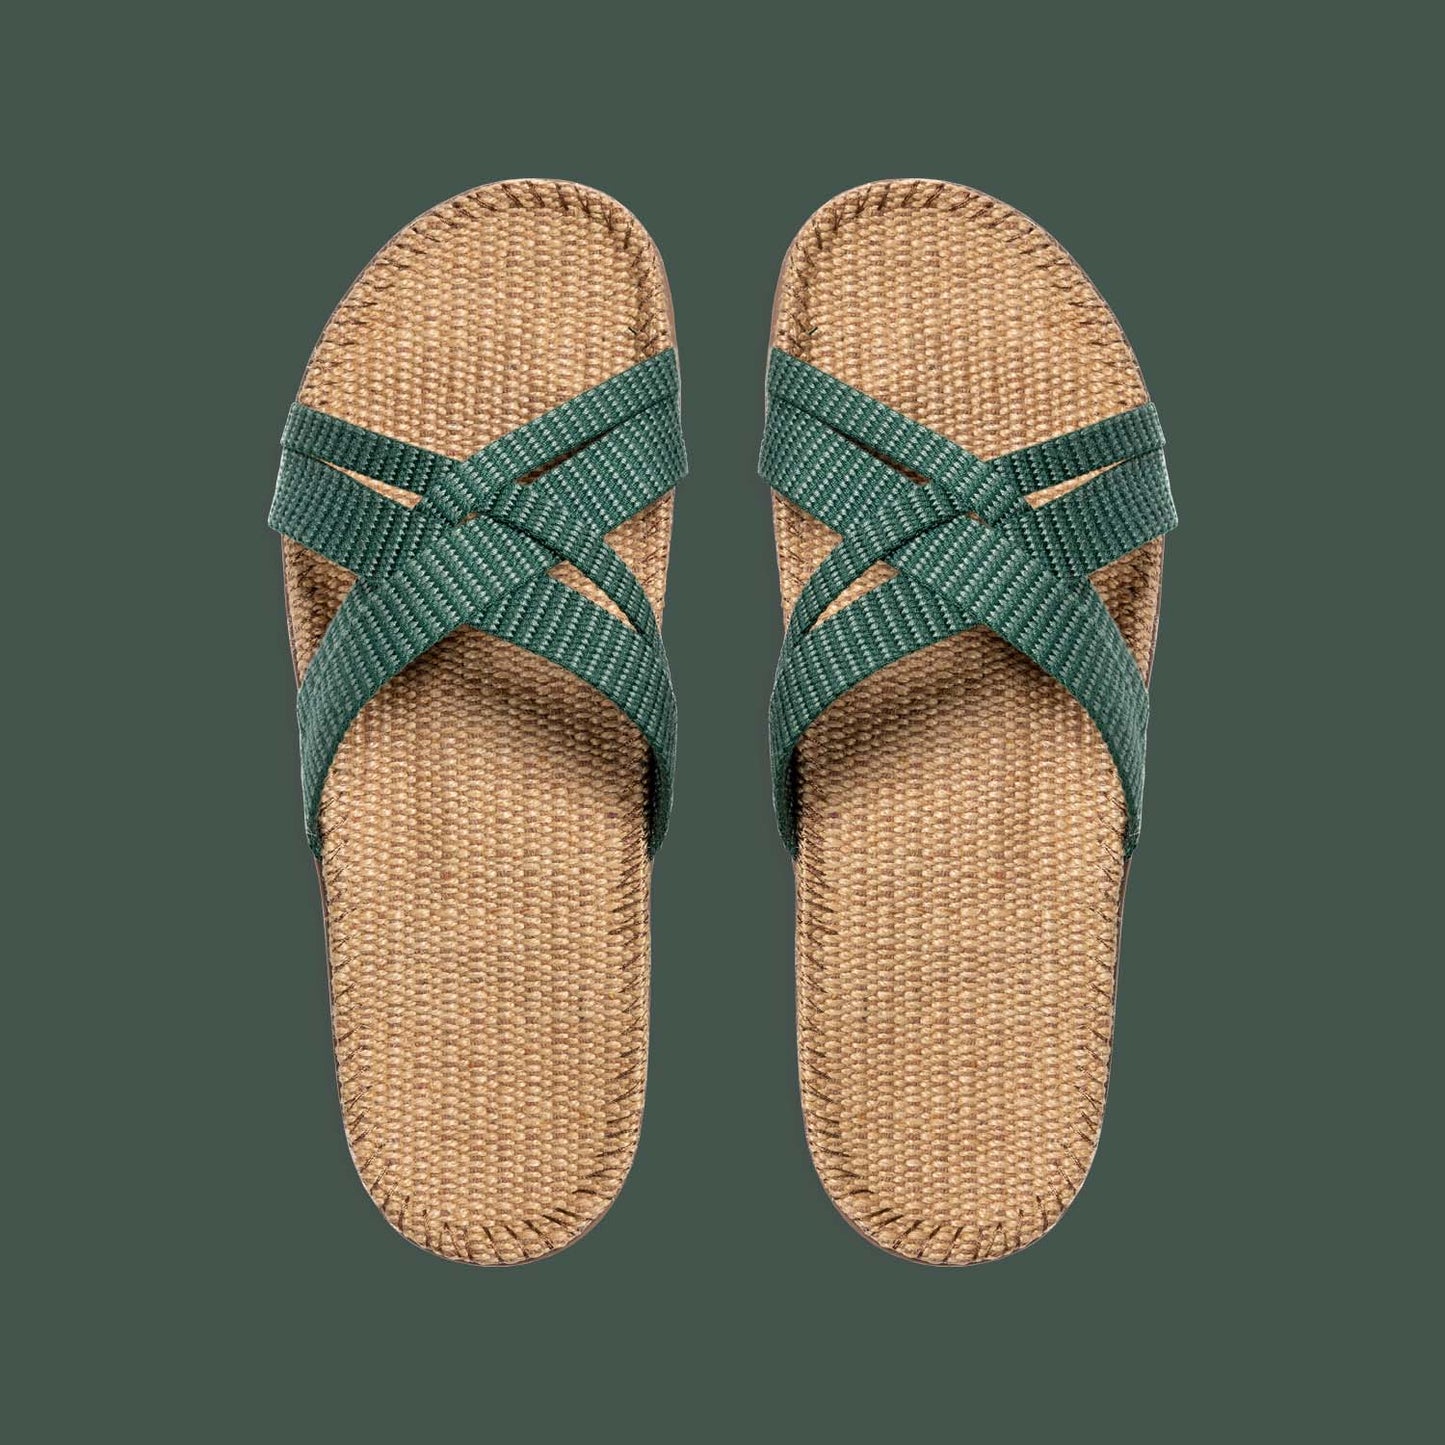 Grøn jute sandal